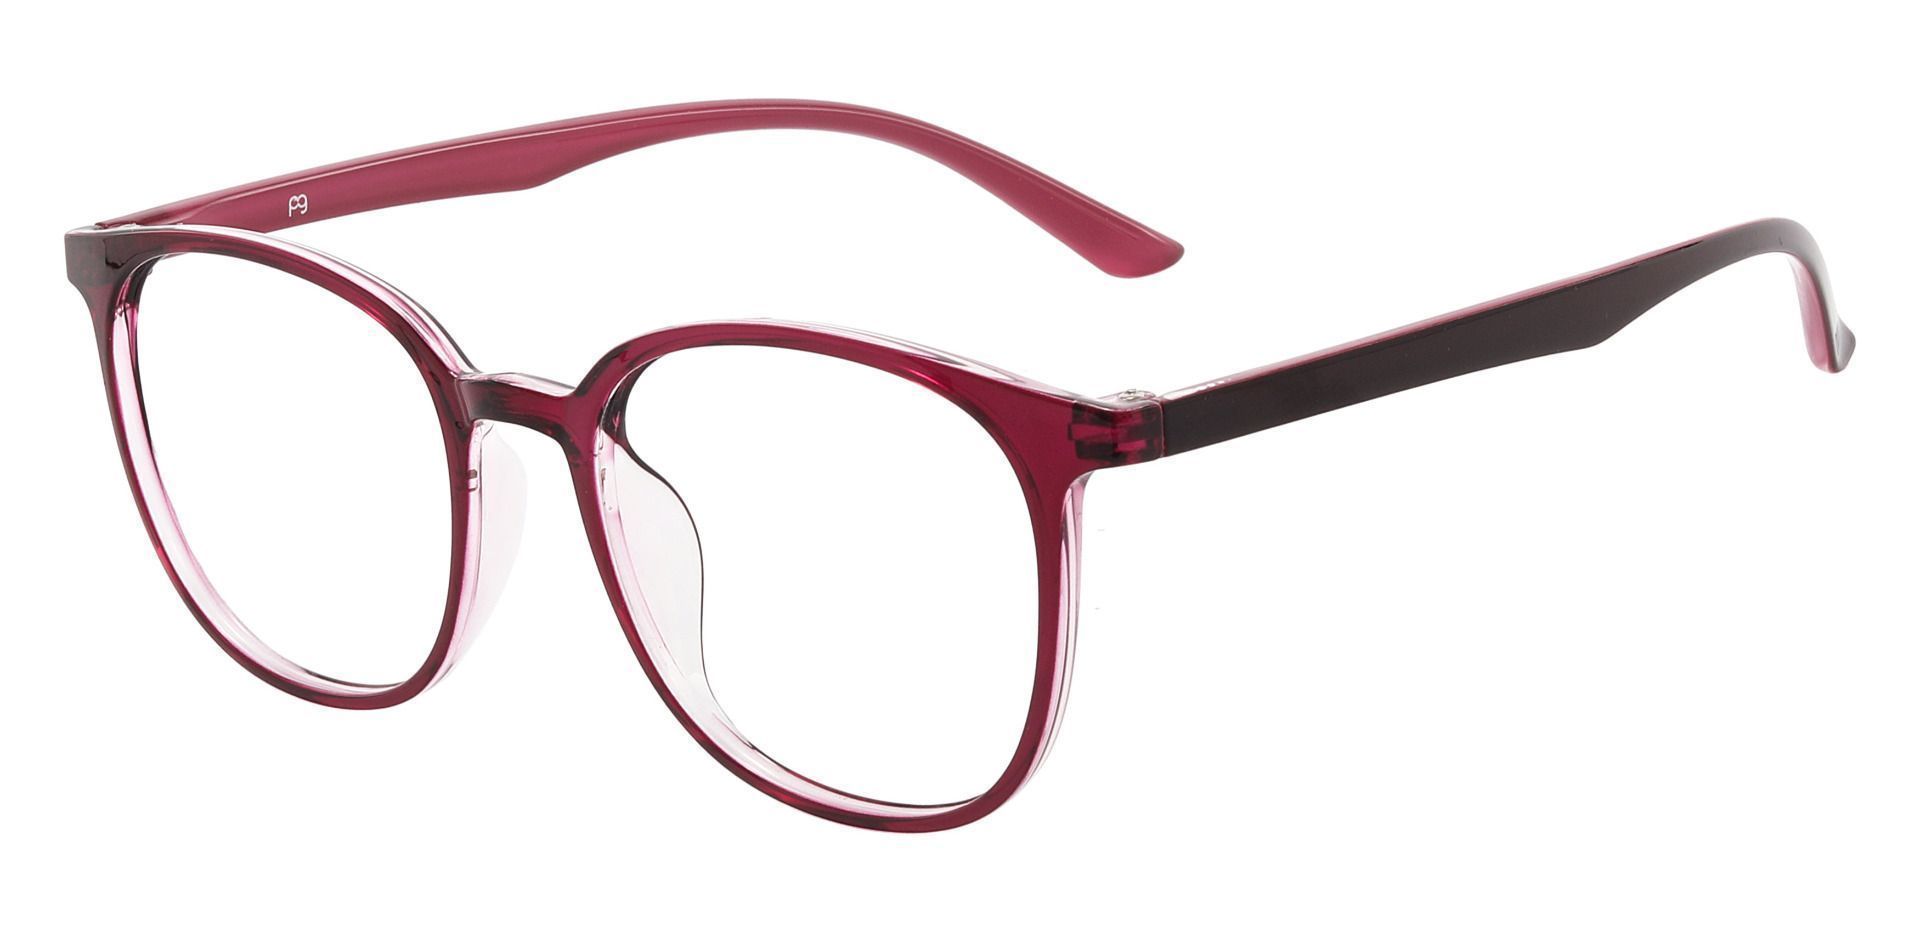 Kelso Square Progressive Glasses - Red